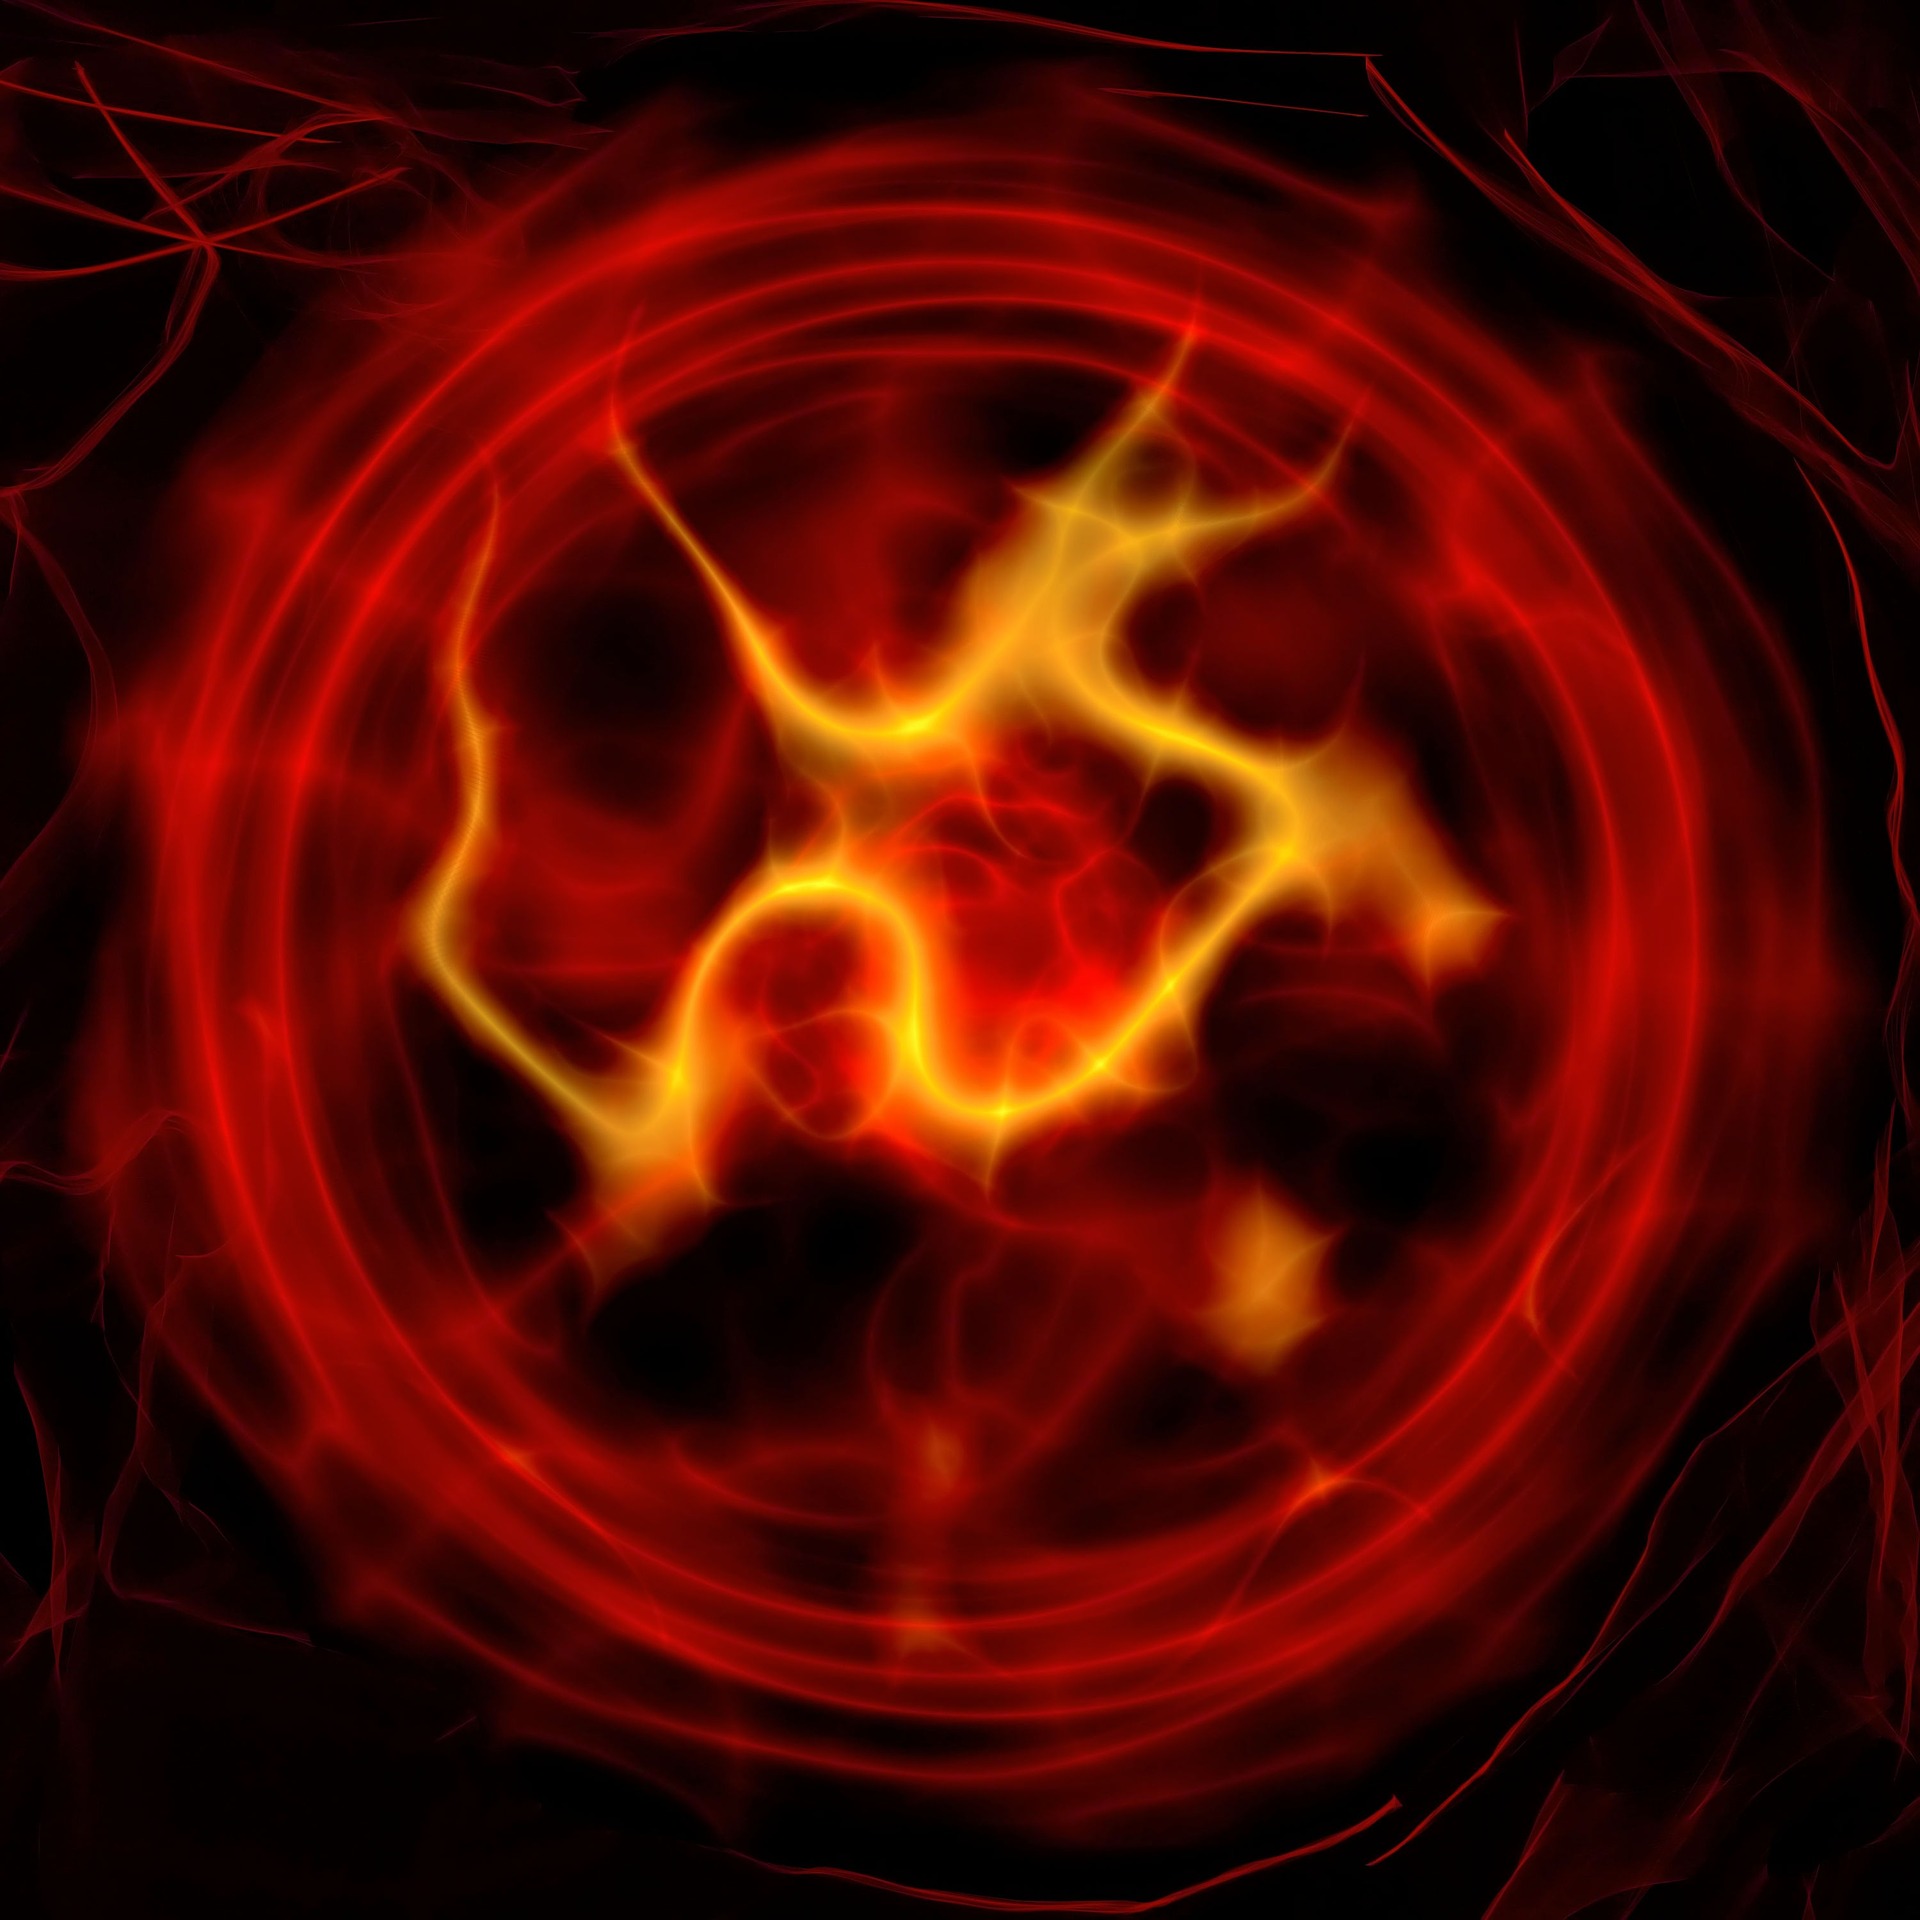 fusion nucleaire chine tokamak - L'Energeek